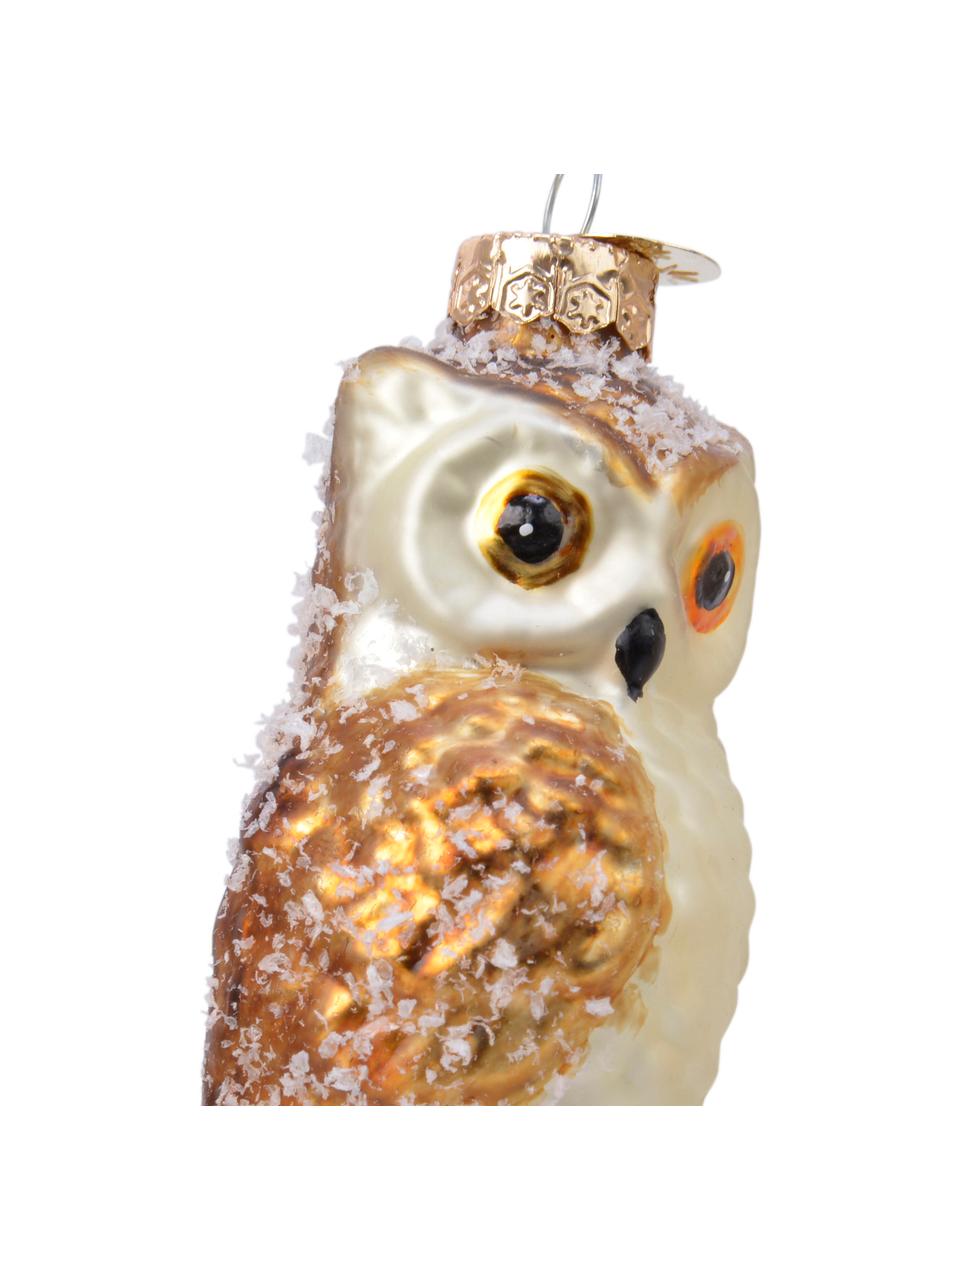 Ozdoby na stromeček Owls, 3 ks, Béžová, zlatá, bílá, Ø 4 cm, V 9 cm